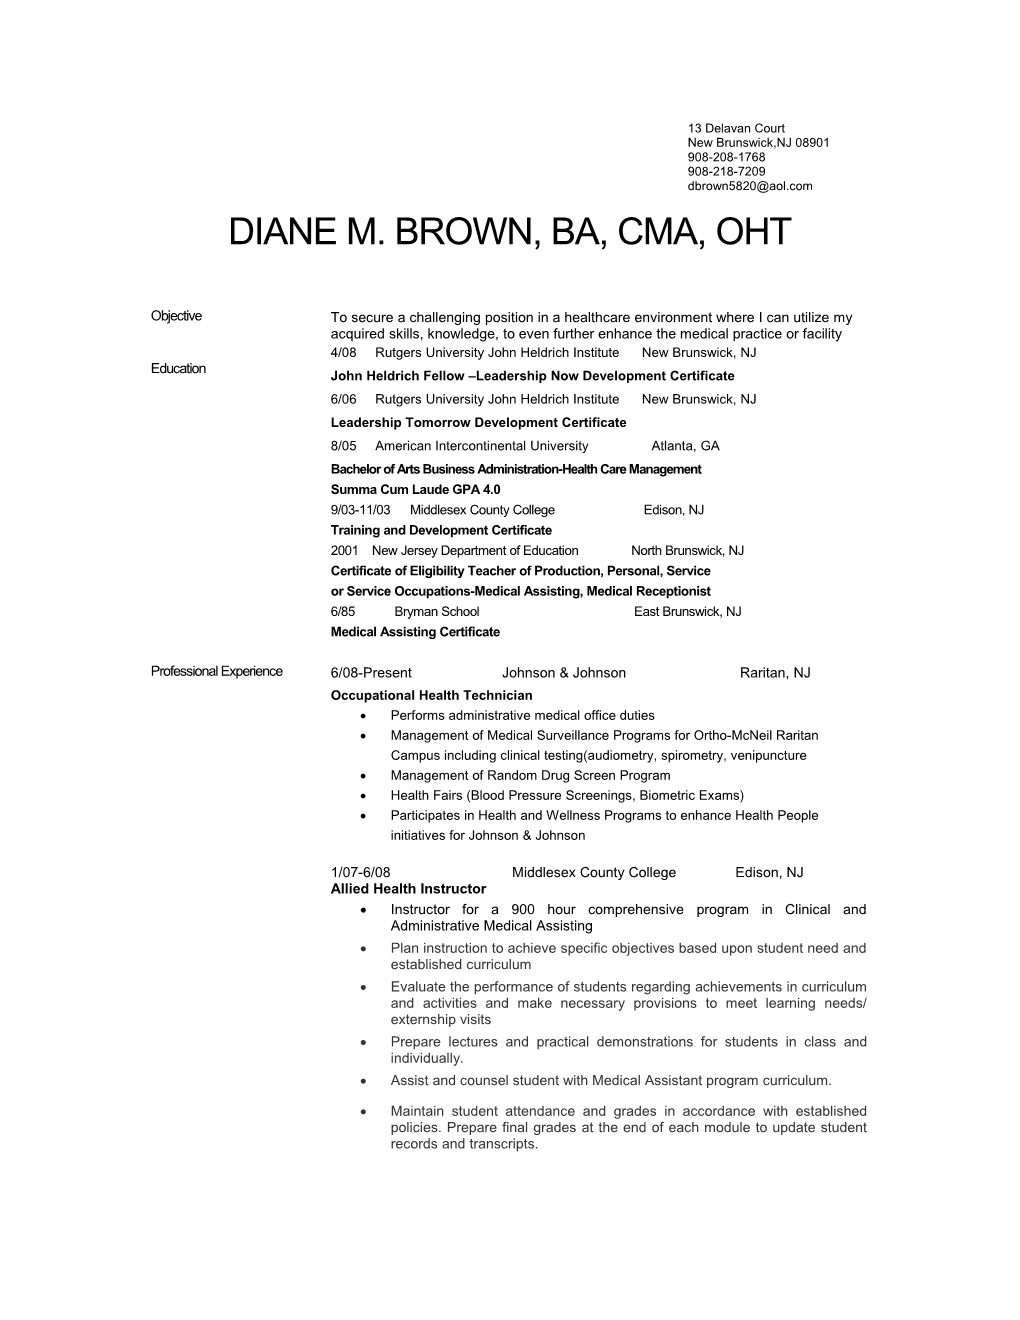 Diane M. Brown, Ba, Cma, Oht